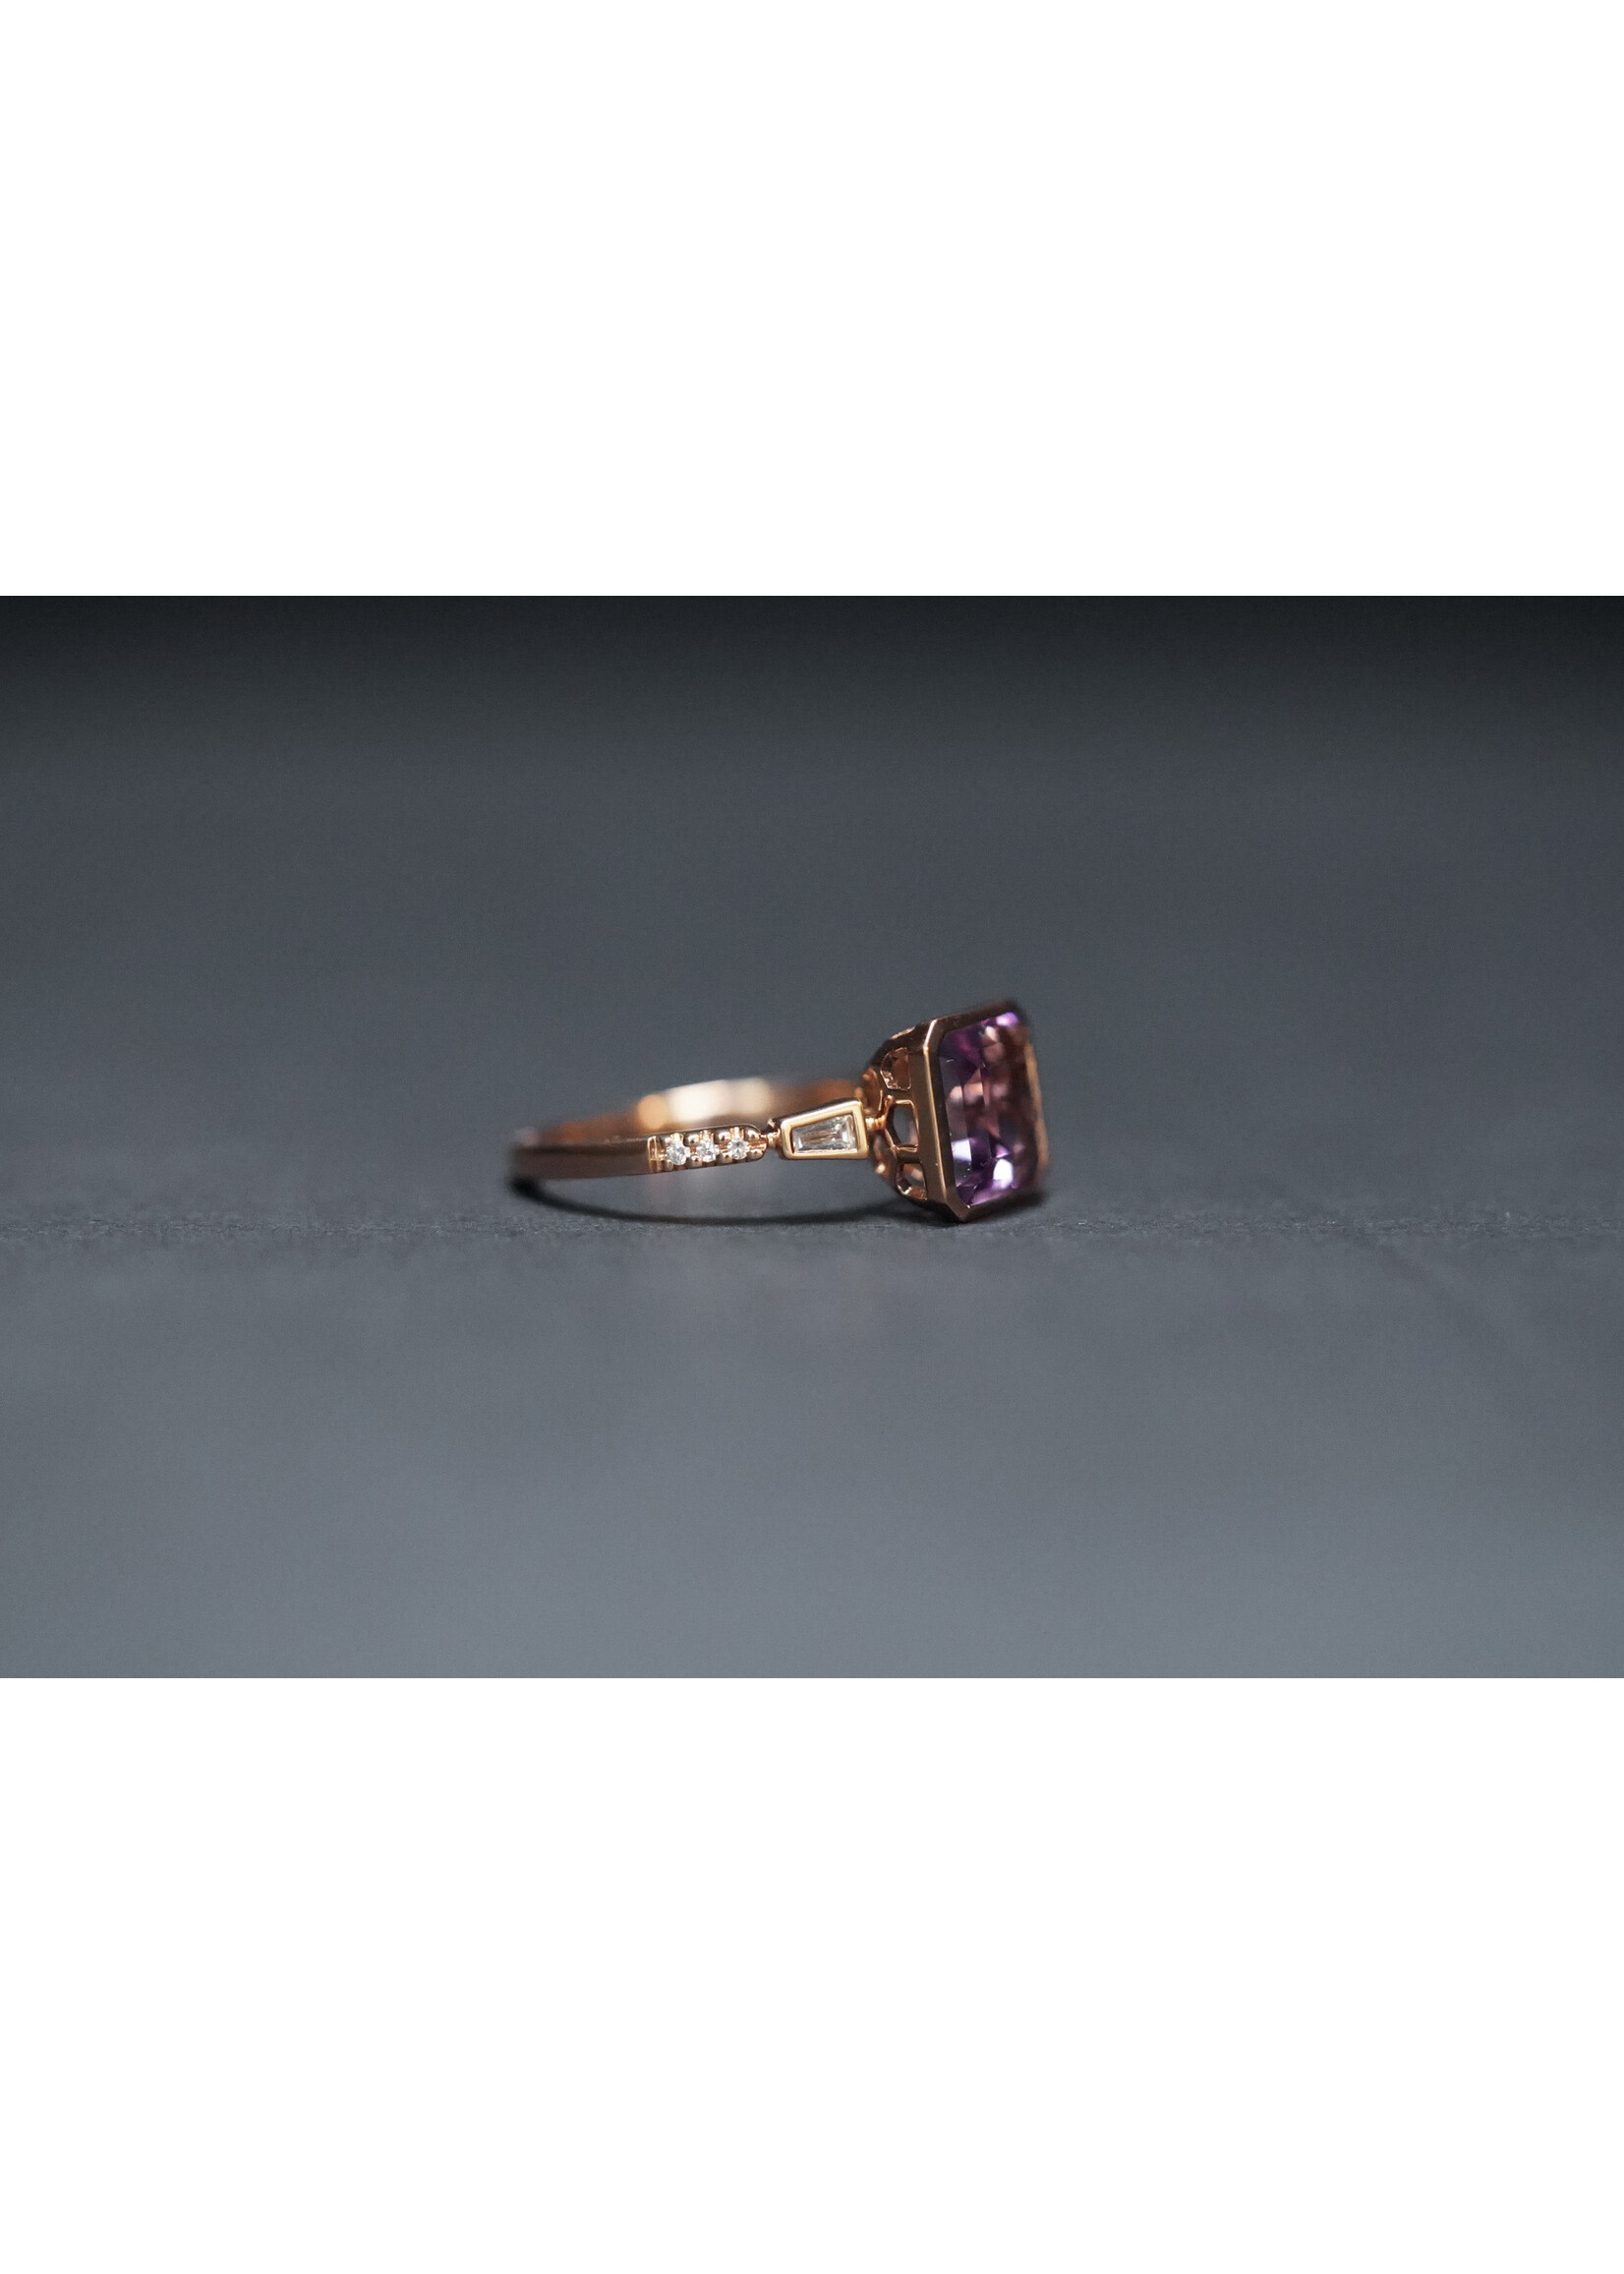 14KR 2.90g 2.56ctw (2.44ctr) Effy Amethsyt & Diamond Fashion Ring (size 7)